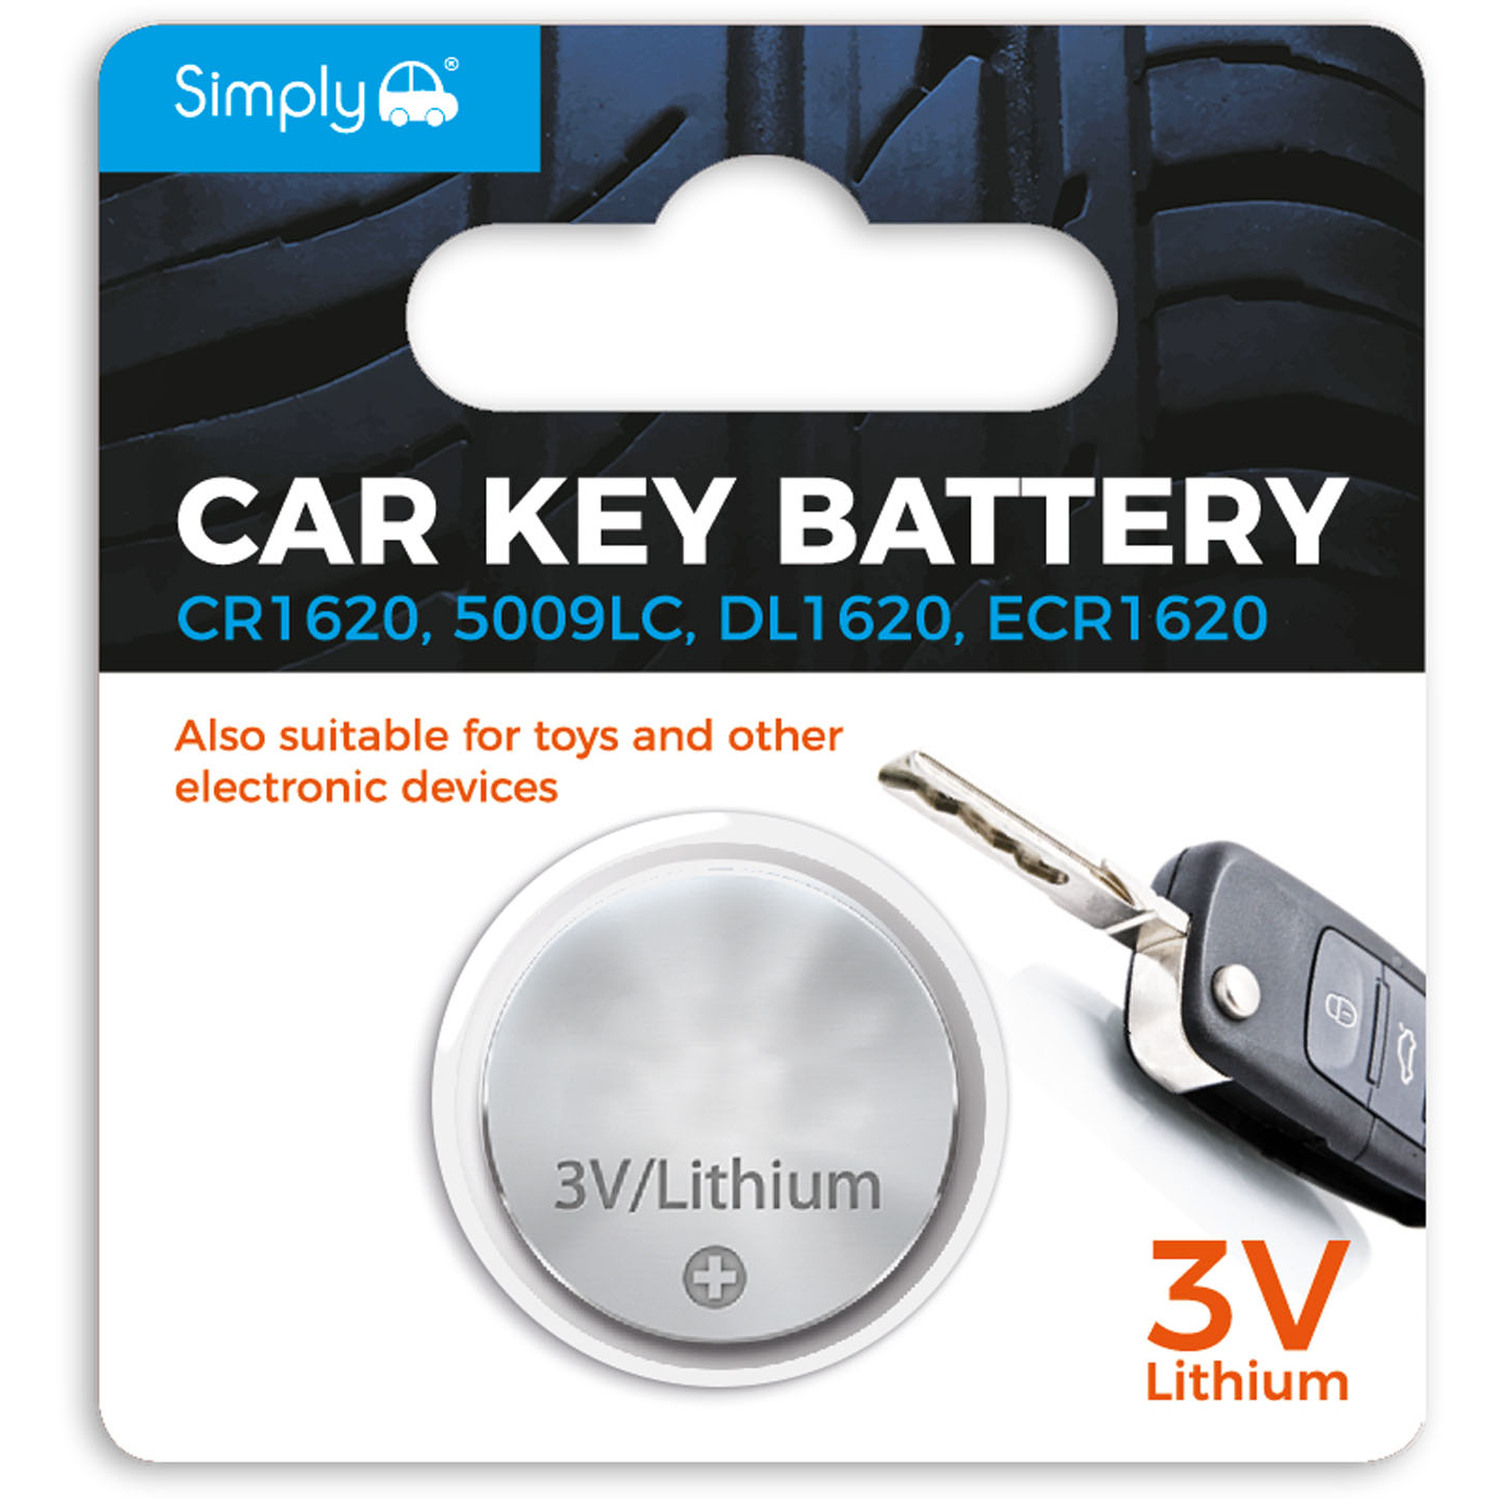 Autobar 25mm 3V CR1620 Lithium Car Key Battery Image